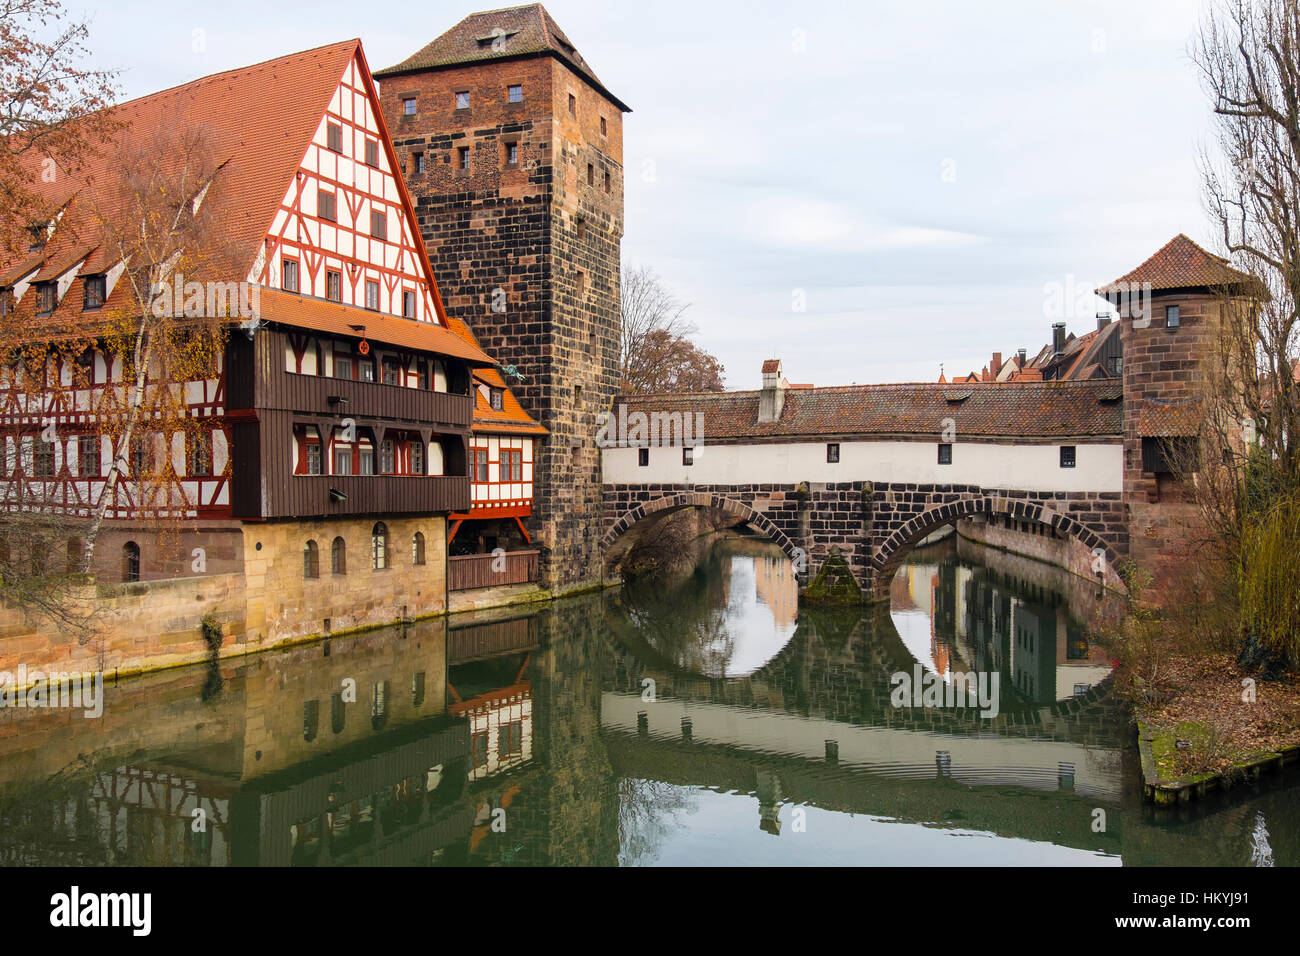 15th century Weinstadle timbered building and Henkersteg or Hangman's Bridge reflected in Pegnitz River.  Nuremberg, Bavaria, Germany, Europe Stock Photo